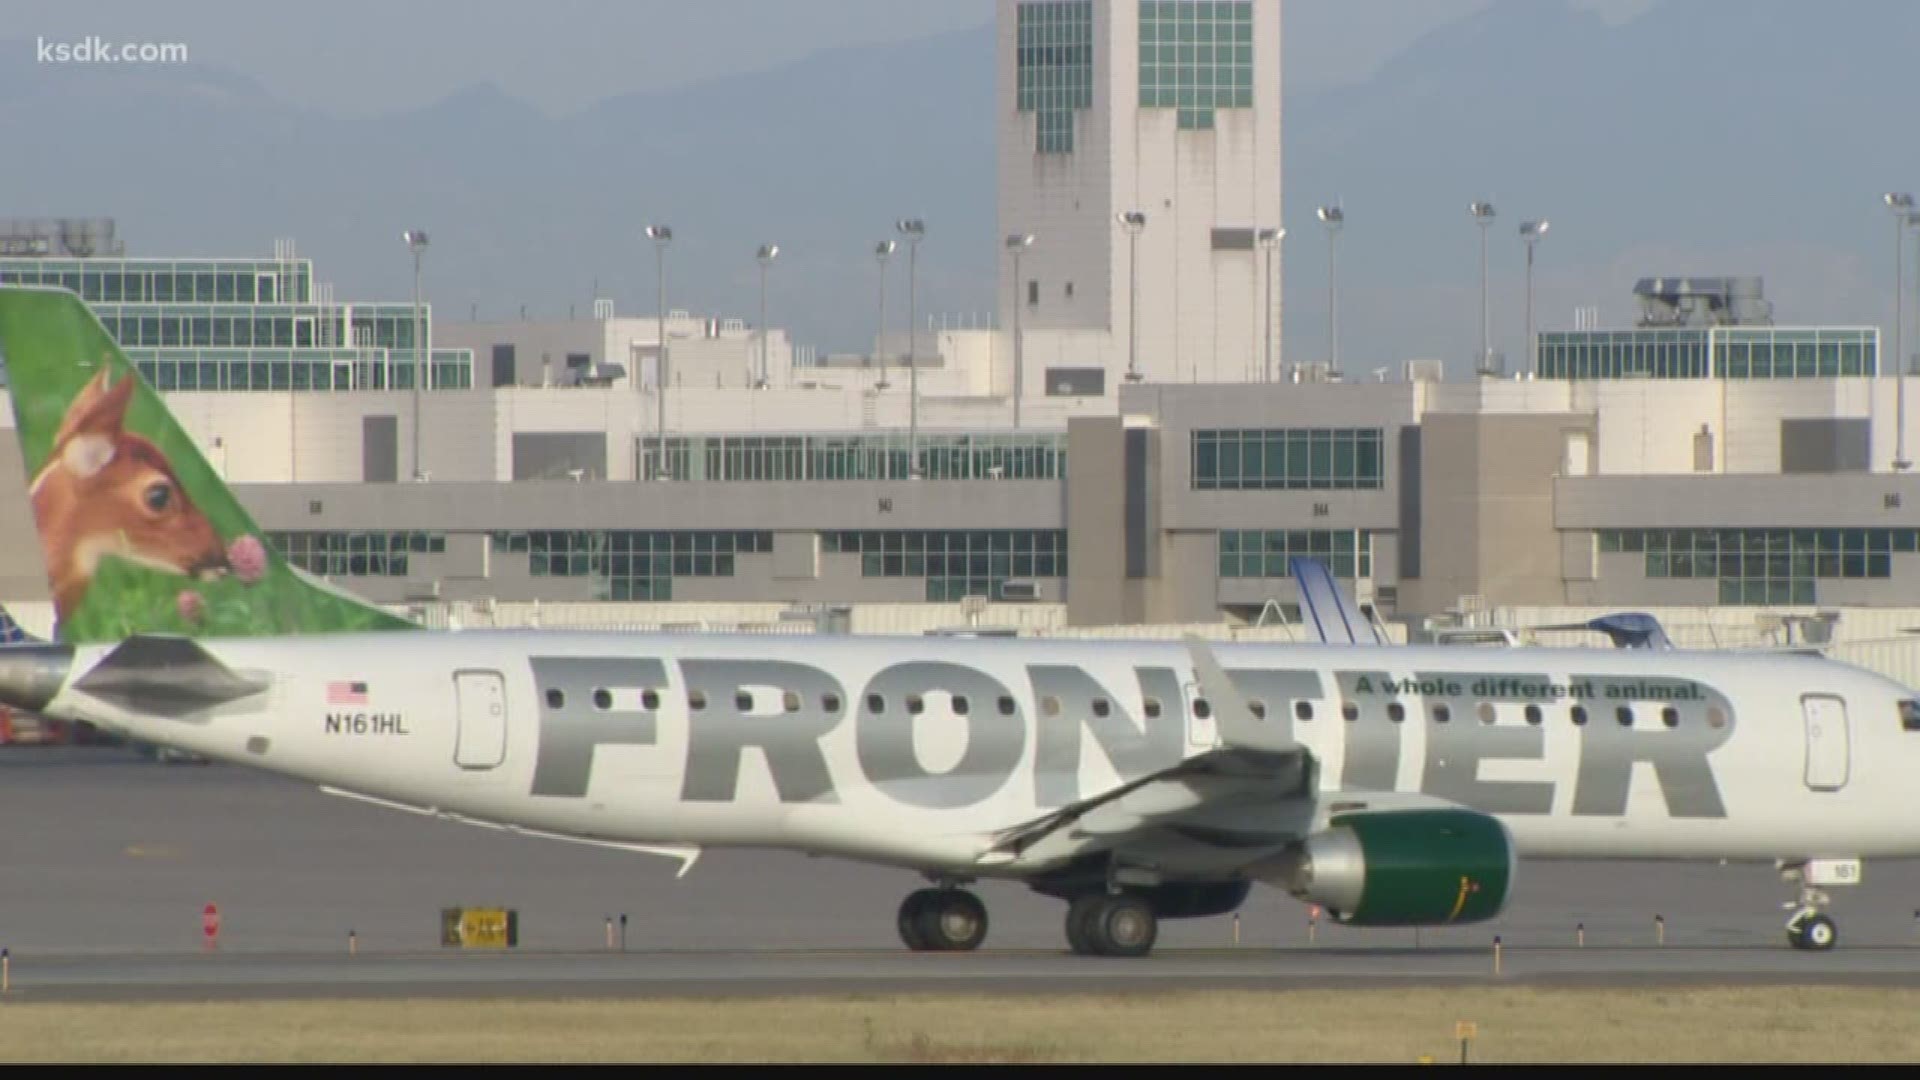 Frontier offering $29 flights to Tampa, $69 flights to Denver | www.waldenwongart.com